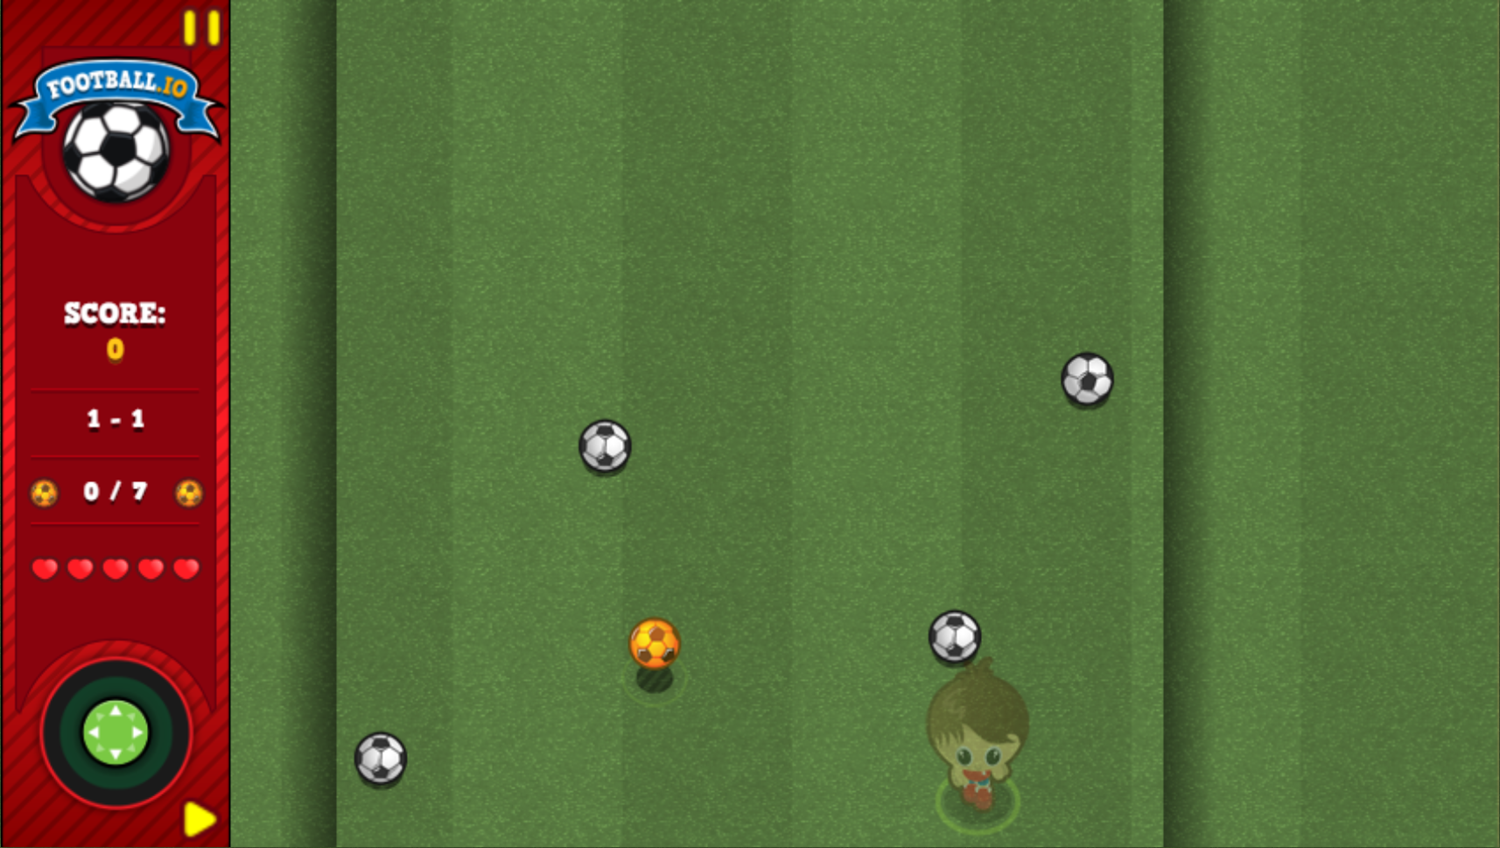 Football.io Game Start Screenshot.